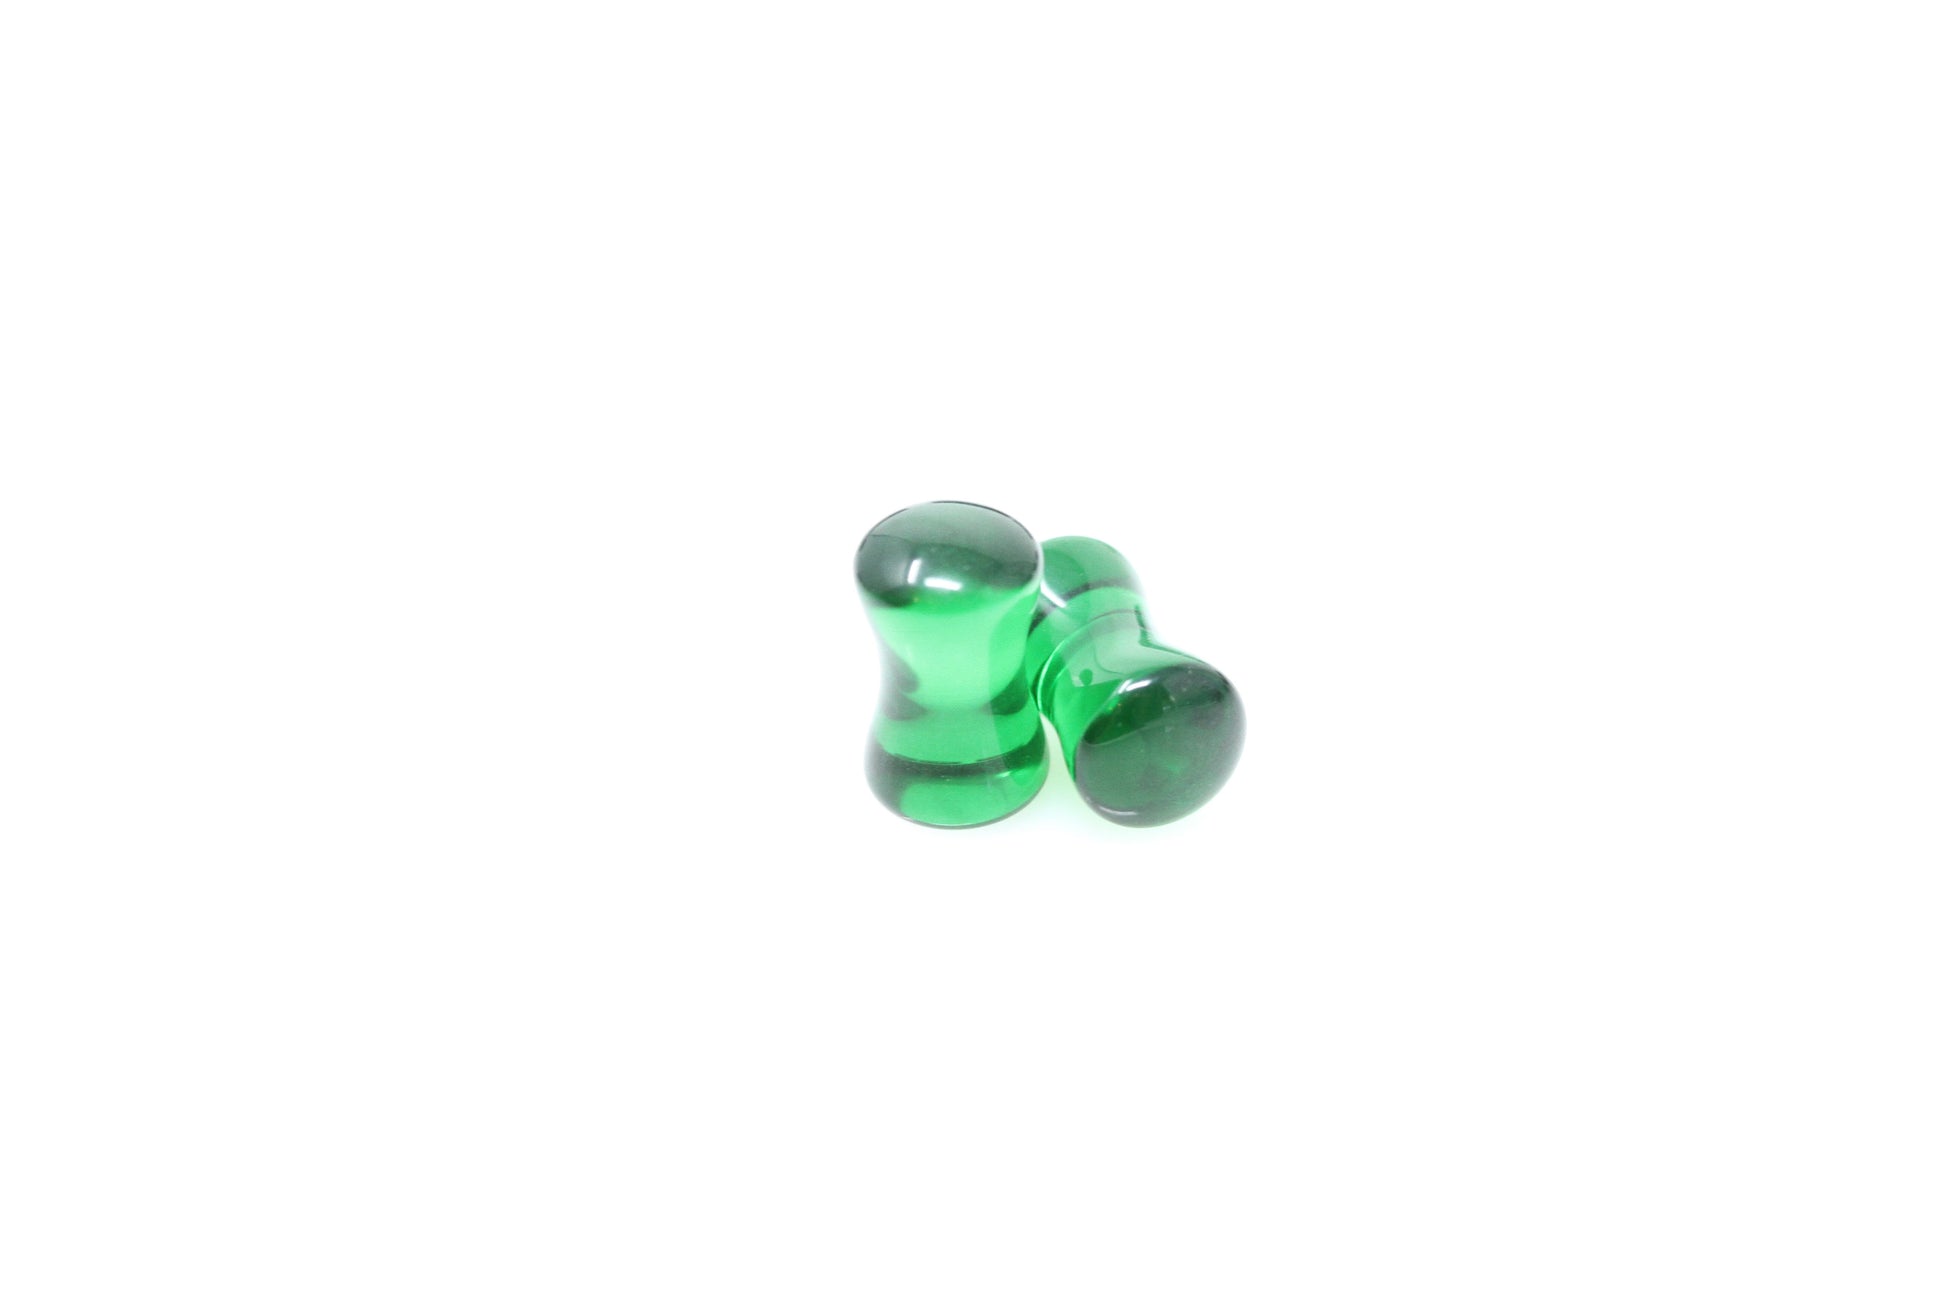 6mm green glass plugs